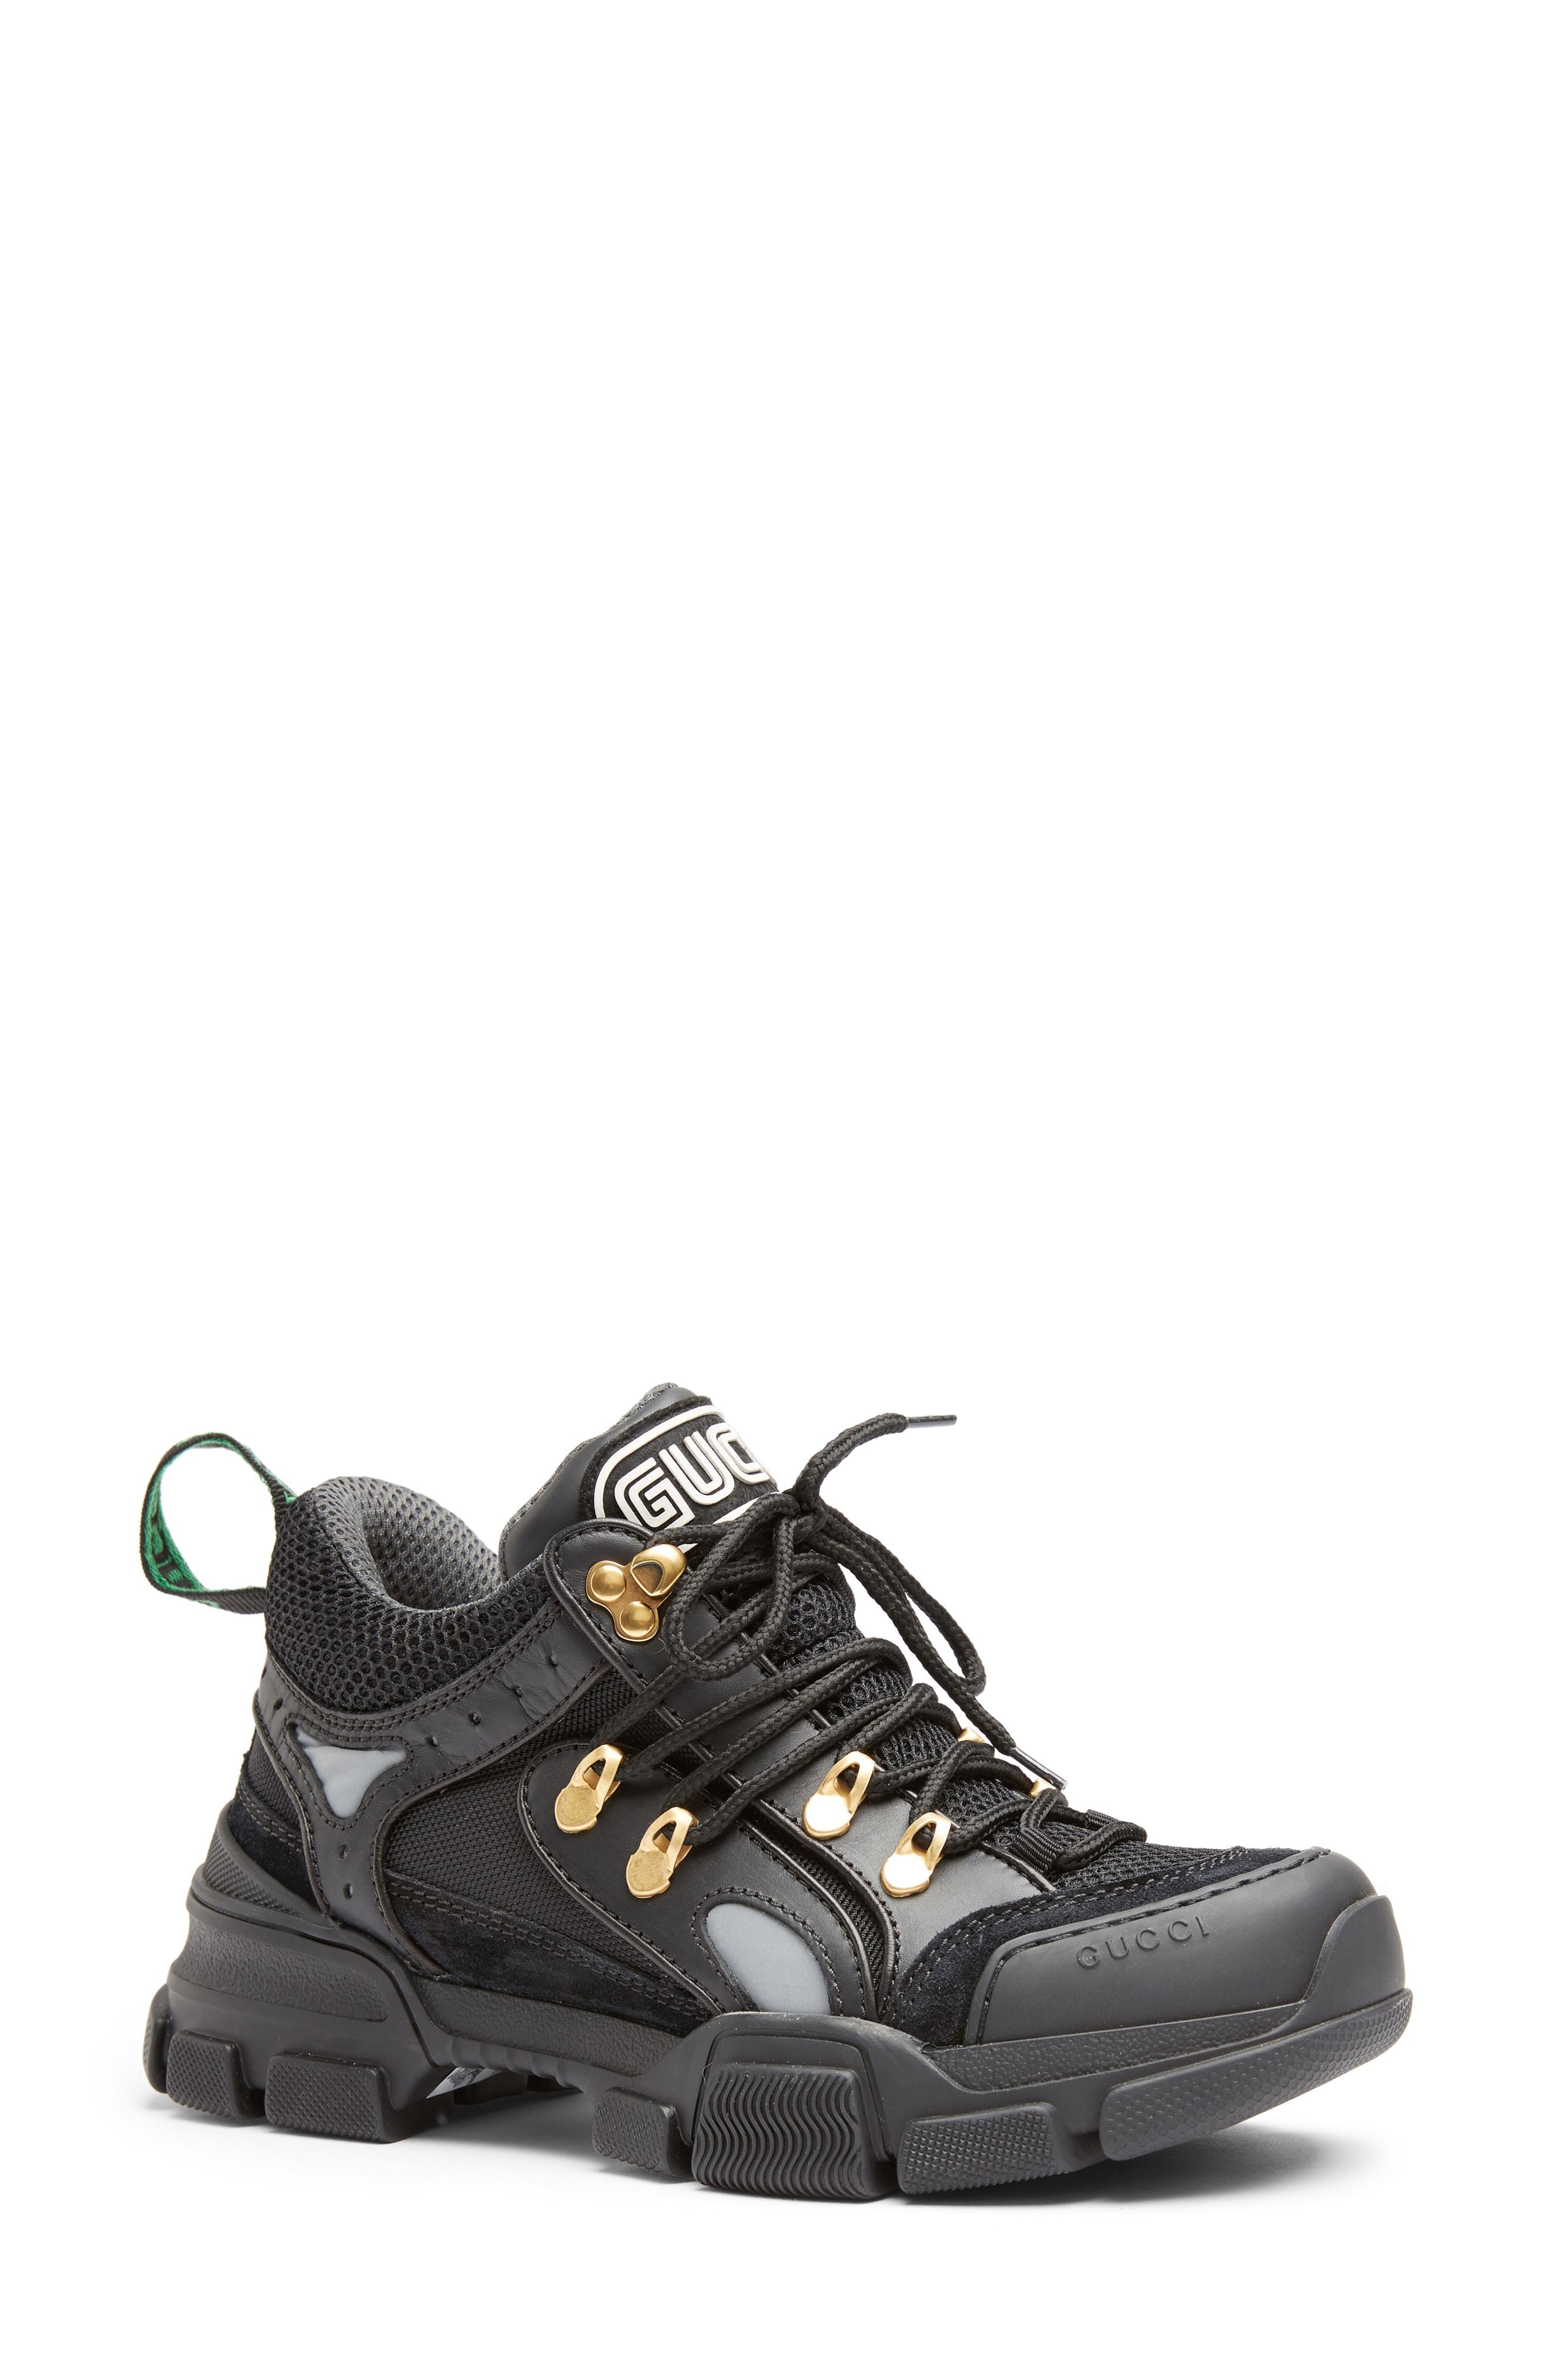 gucci flashtrek sneaker black